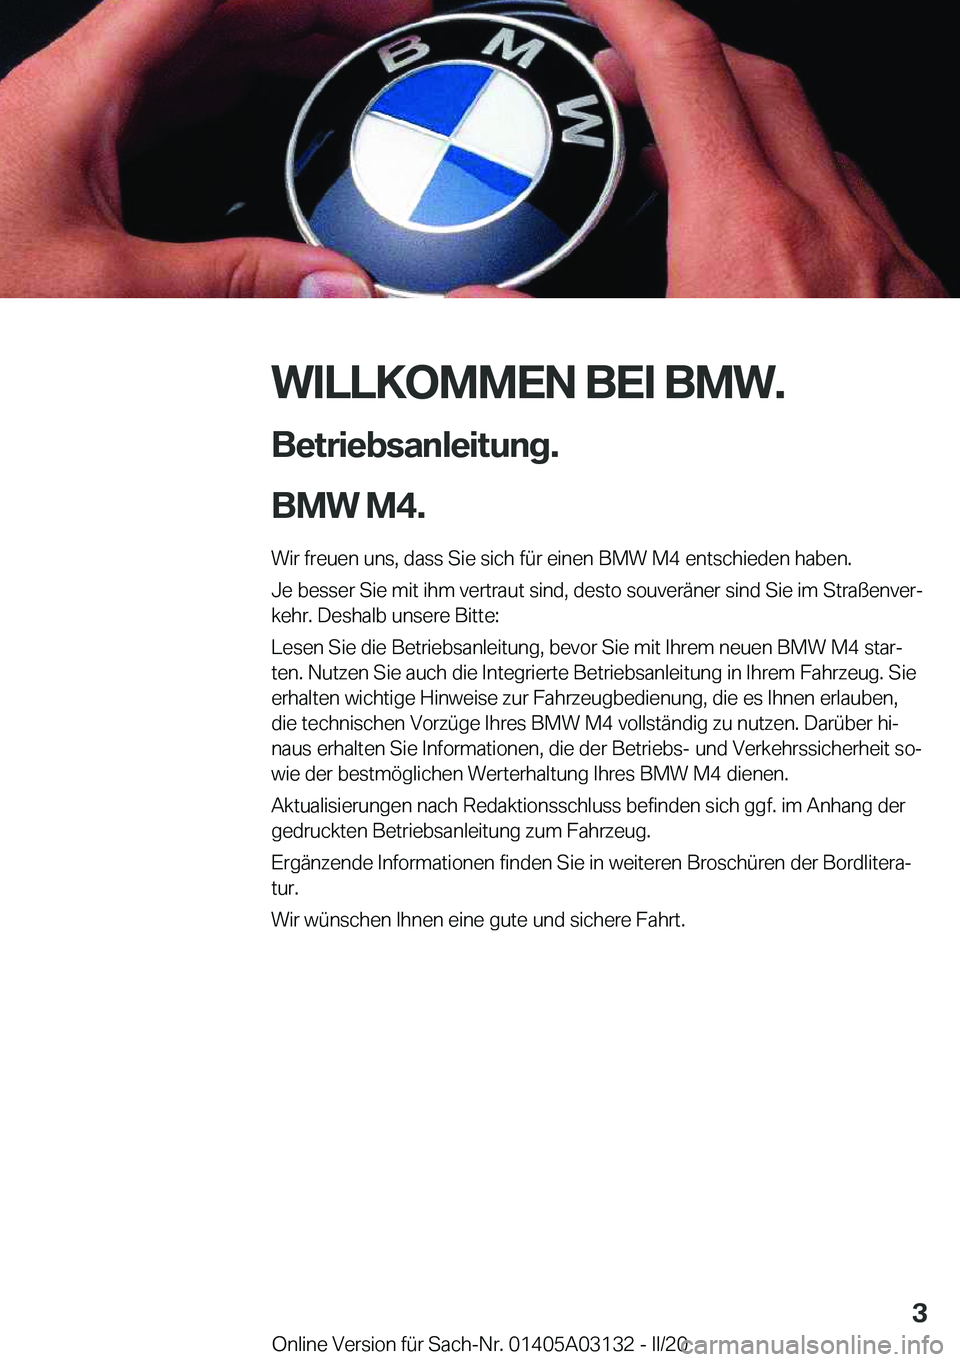 BMW M4 2020  Betriebsanleitungen (in German) �W�I�L�L�K�O�M�M�E�N��B�E�I��B�M�W�.�B�e�t�r�i�e�b�s�a�n�l�e�i�t�u�n�g�.
�B�M�W��M�4�. �W�i�r��f�r�e�u�e�n��u�n�s�,��d�a�s�s��S�i�e��s�i�c�h��f�